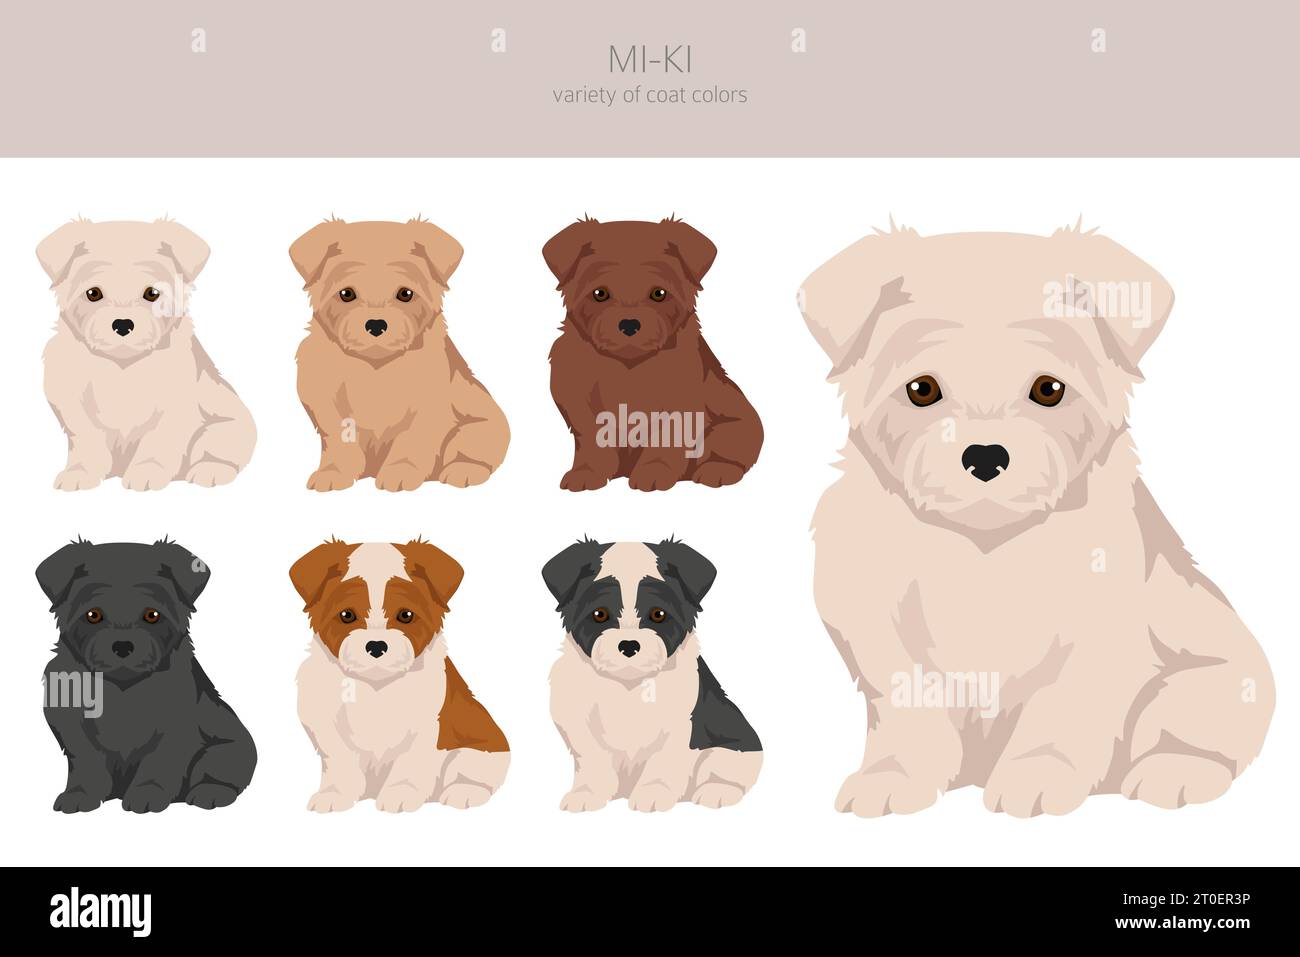 MI-Ki Hundeclipart. Alle Lackfarben festgelegt. Infografik zu den Merkmalen aller Hunderassen. Vektorabbildung Stock Vektor